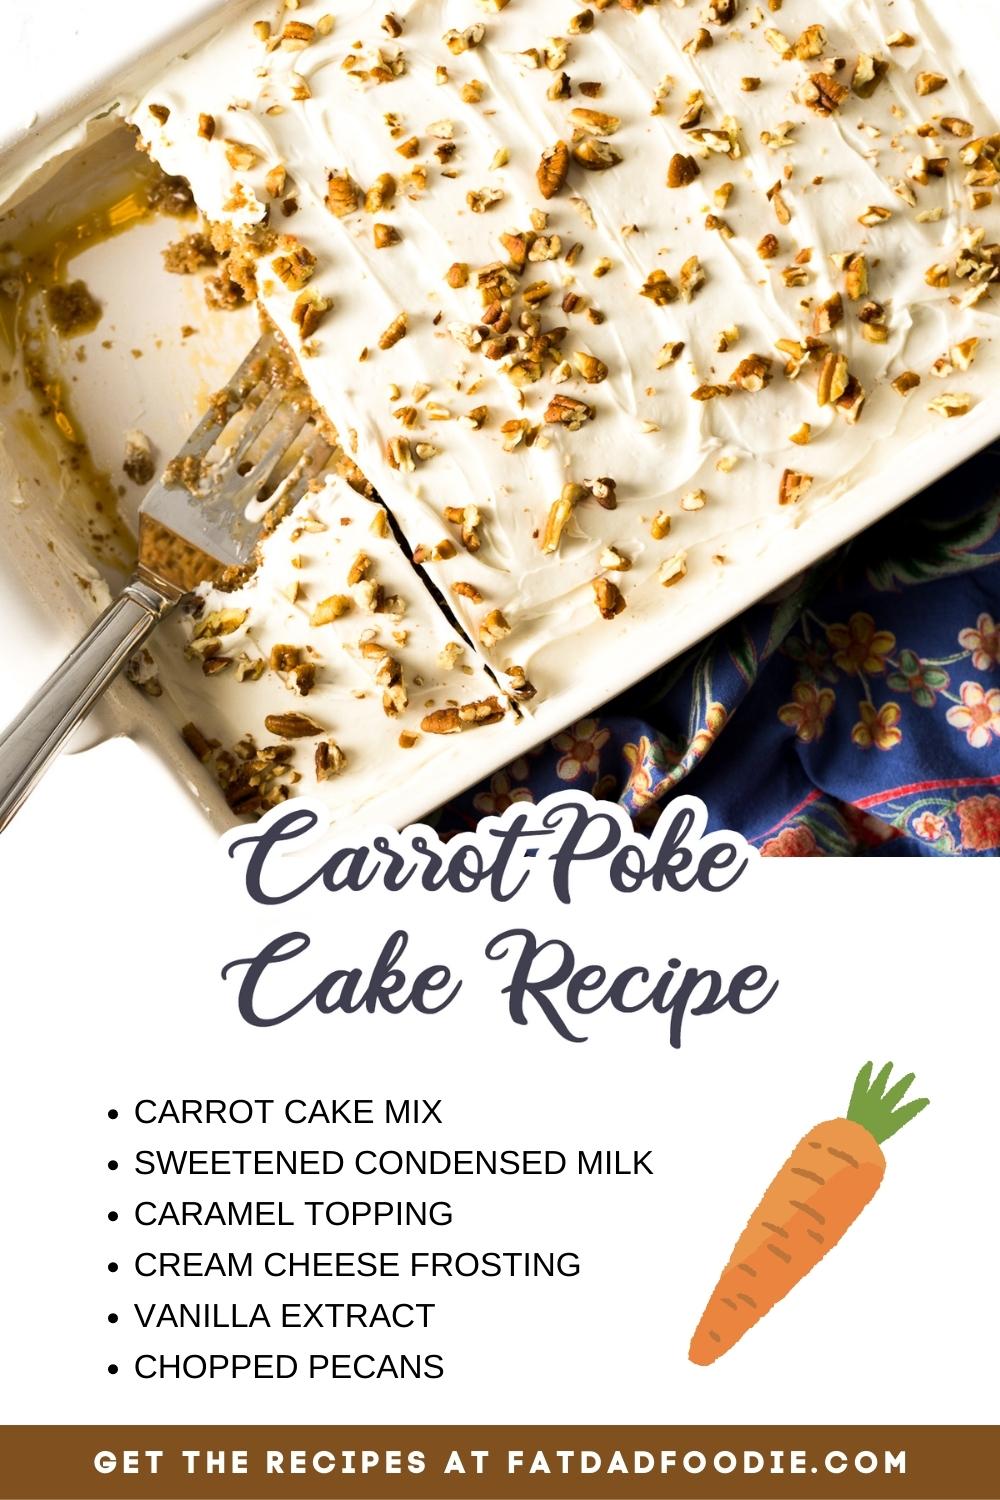 carrot poke cake recipe ingredient list